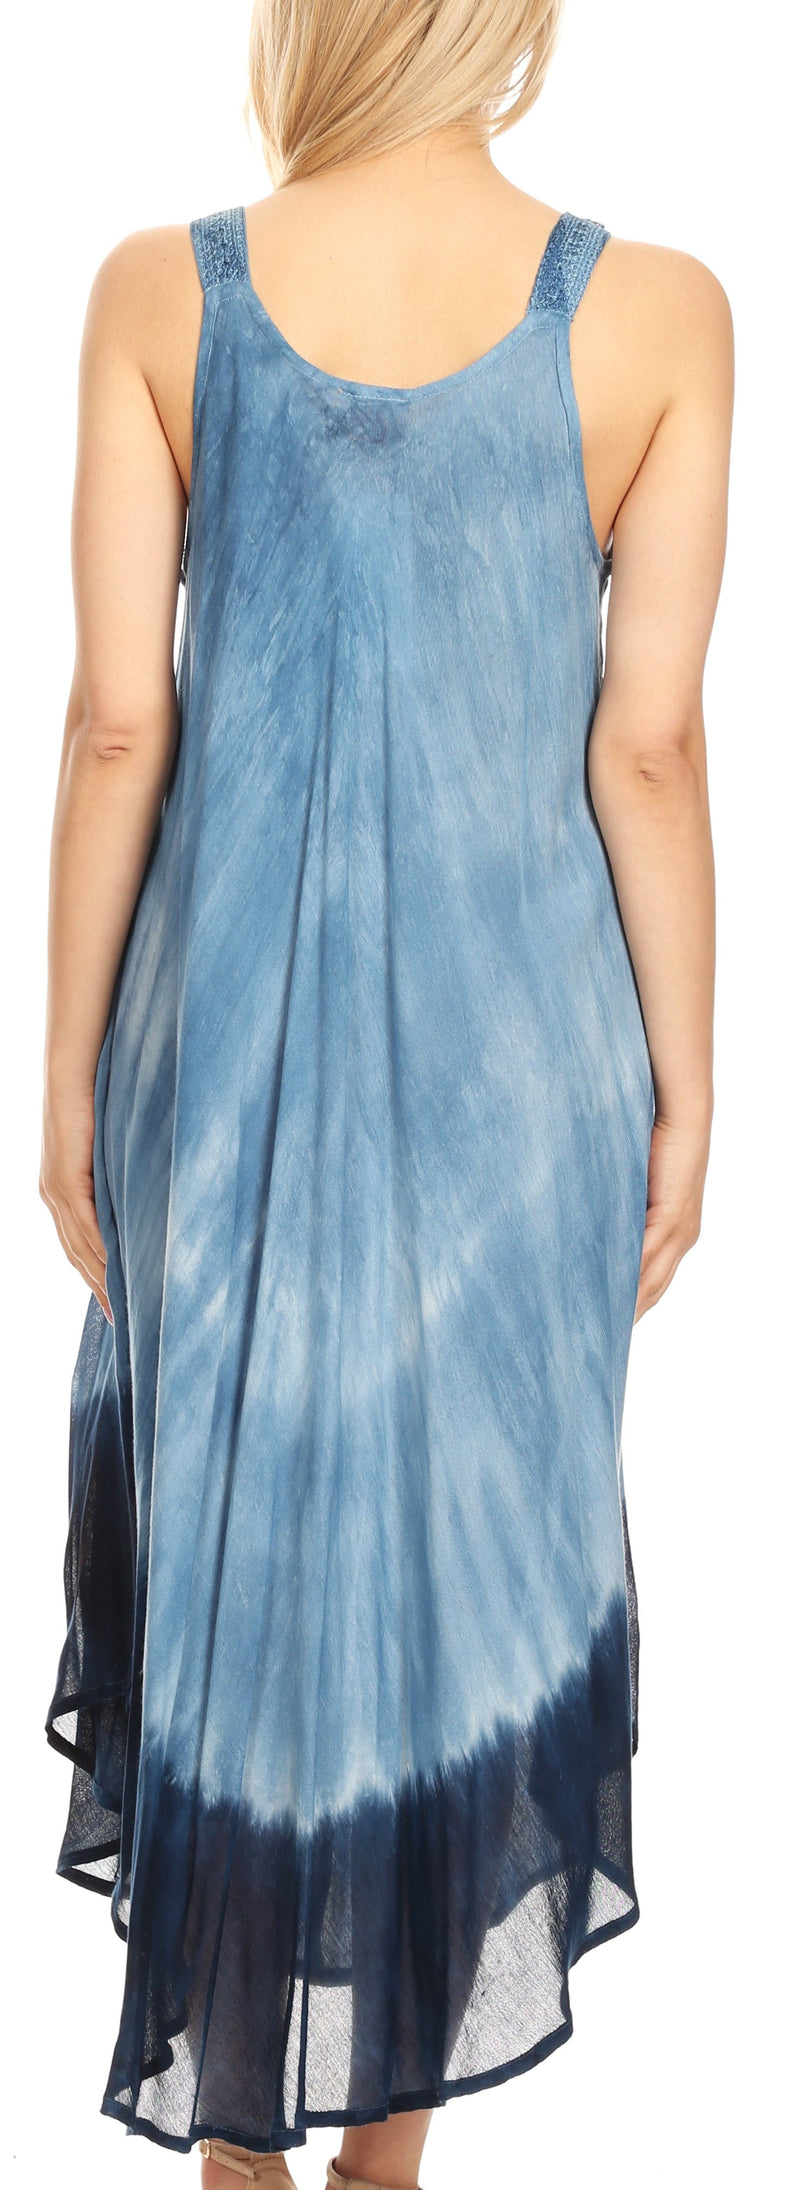 Sakkas Oxa Women's Casual Summer Maxi Long Loose Sleeveless V-neck Dress Cover-up